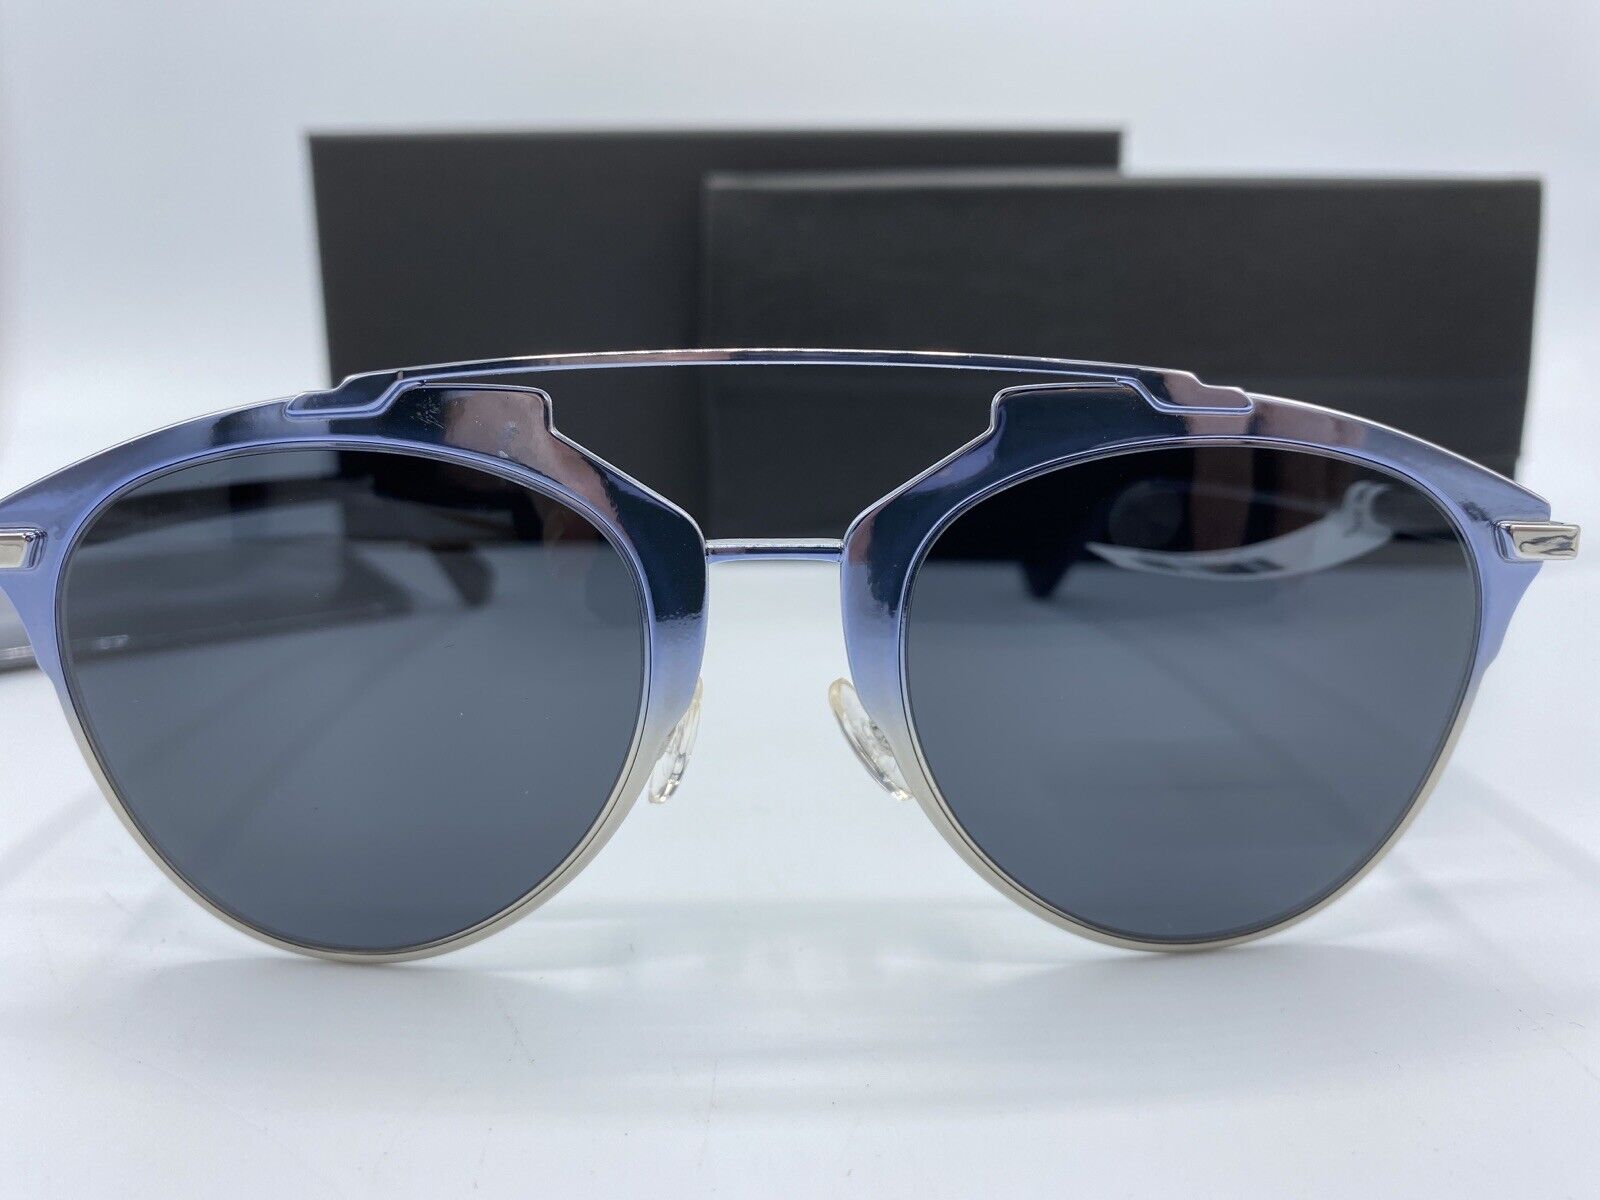 Christian Dior Reflected/ Chic Blue Fades -Silver Aviator Sunglasses Retail $598